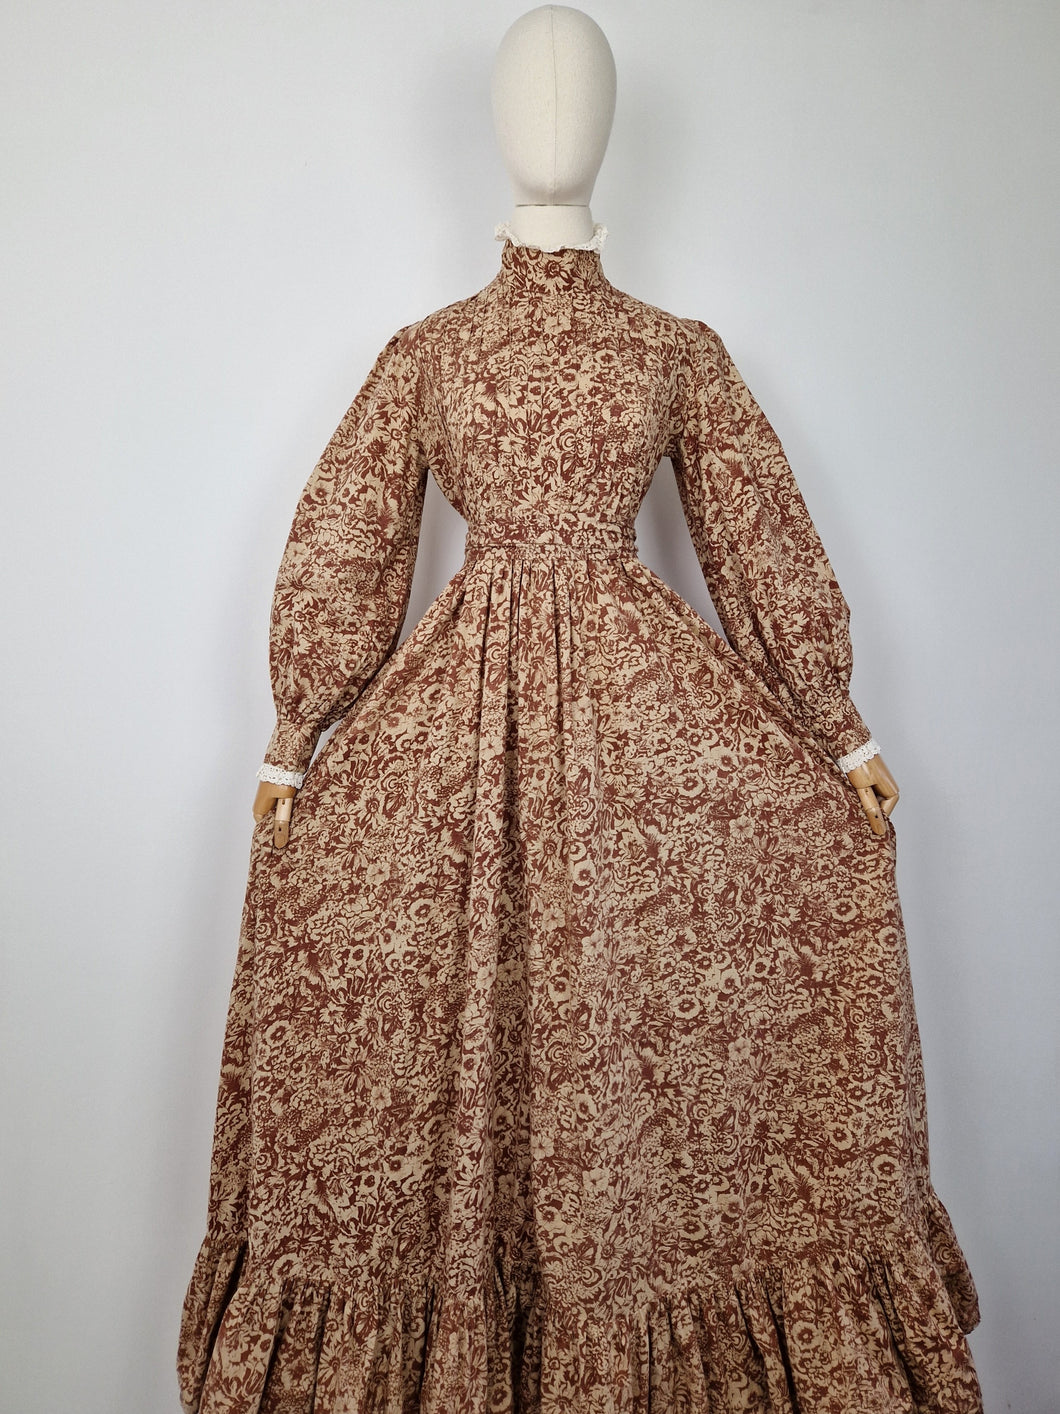 Vintage 70s Laura Ashley light brown prairie dress